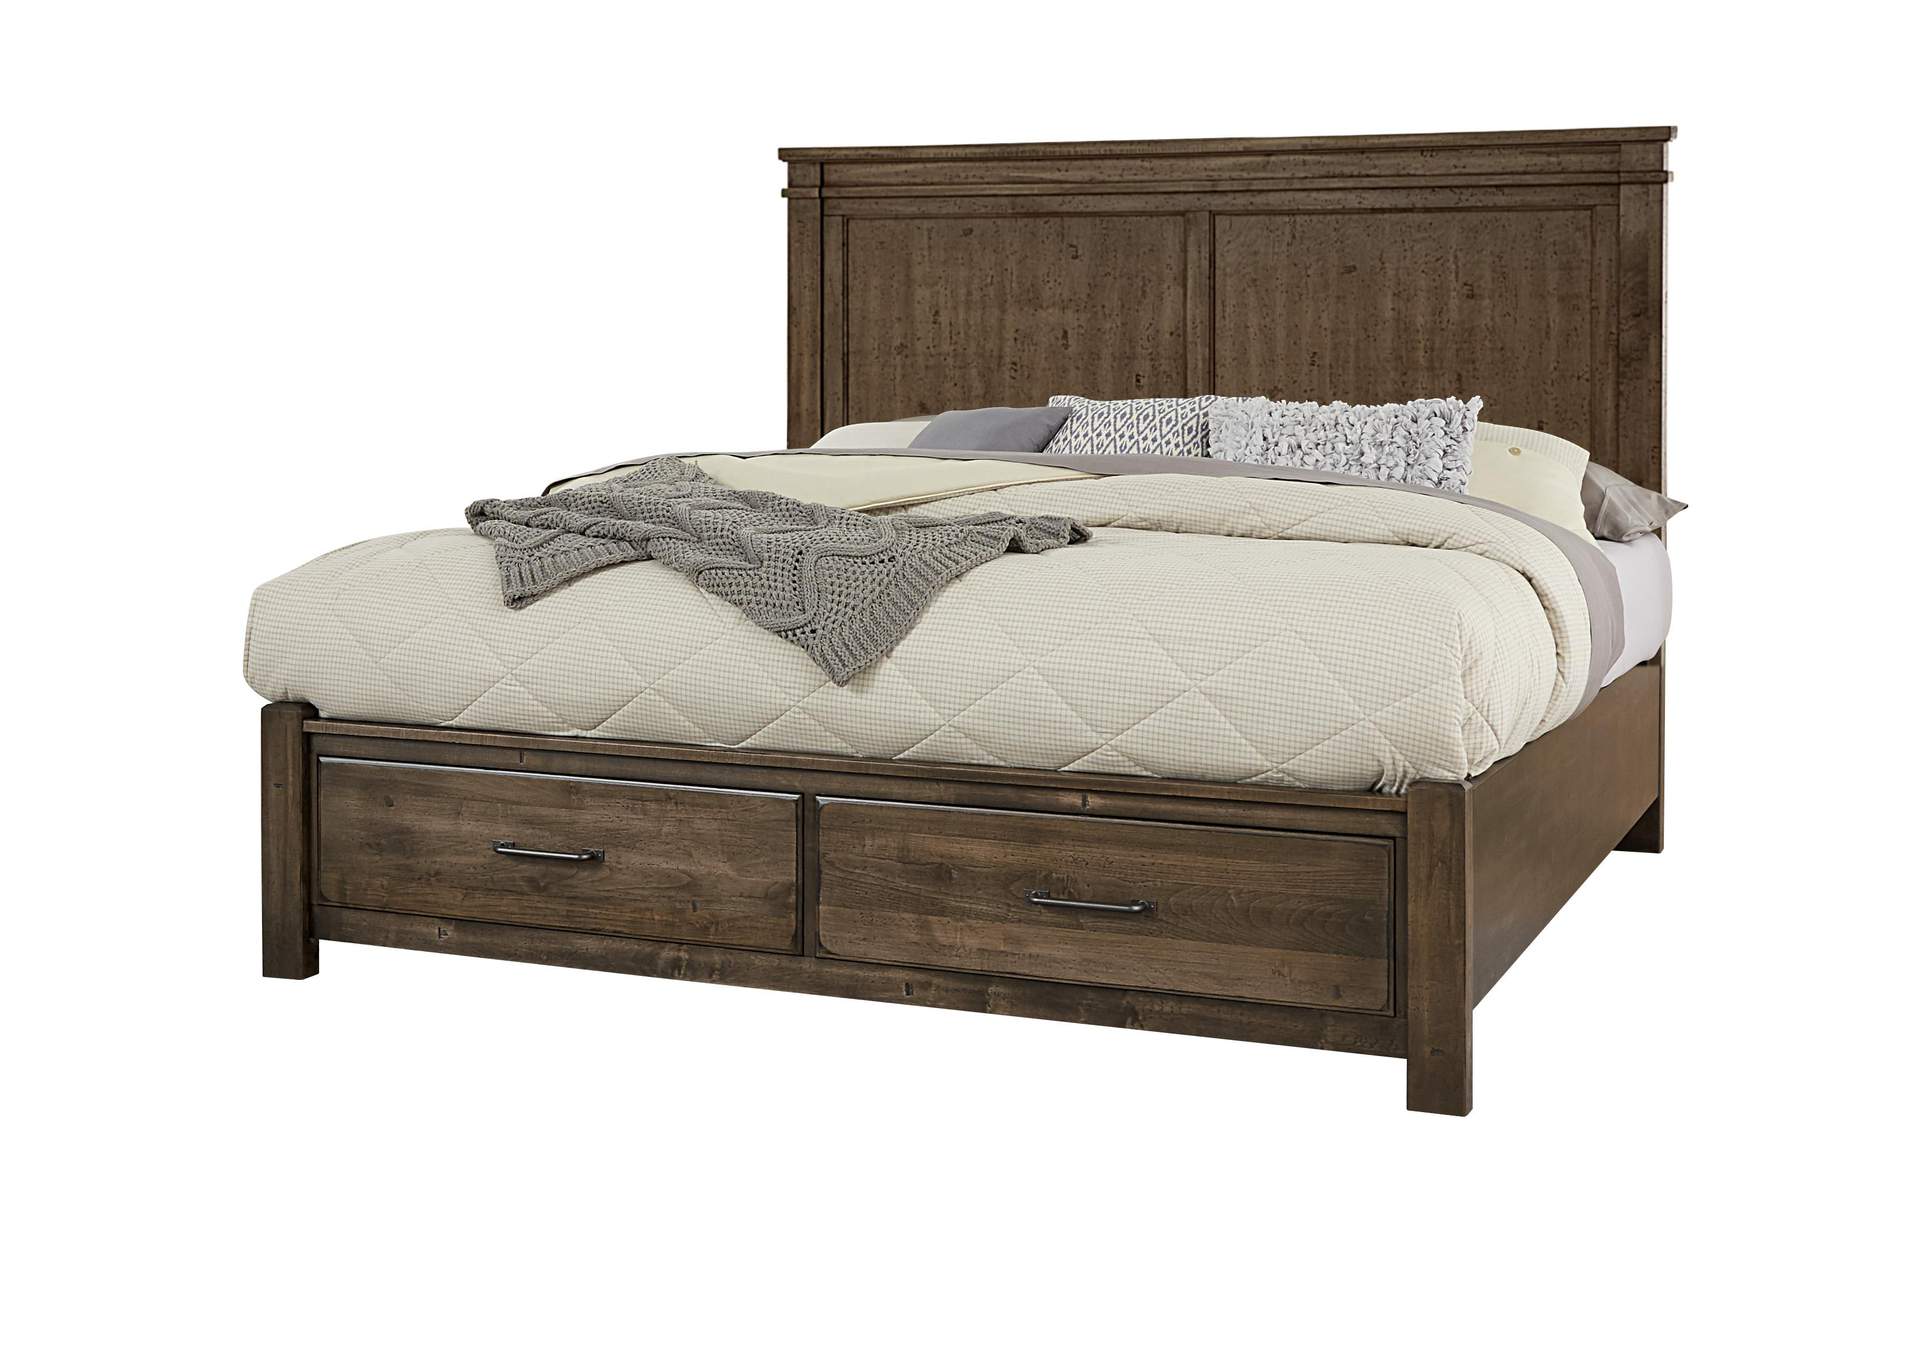 Cool Rustic Mondo Mansion Queen Bed w/2 Drawer Storage,Vaughan-Bassett